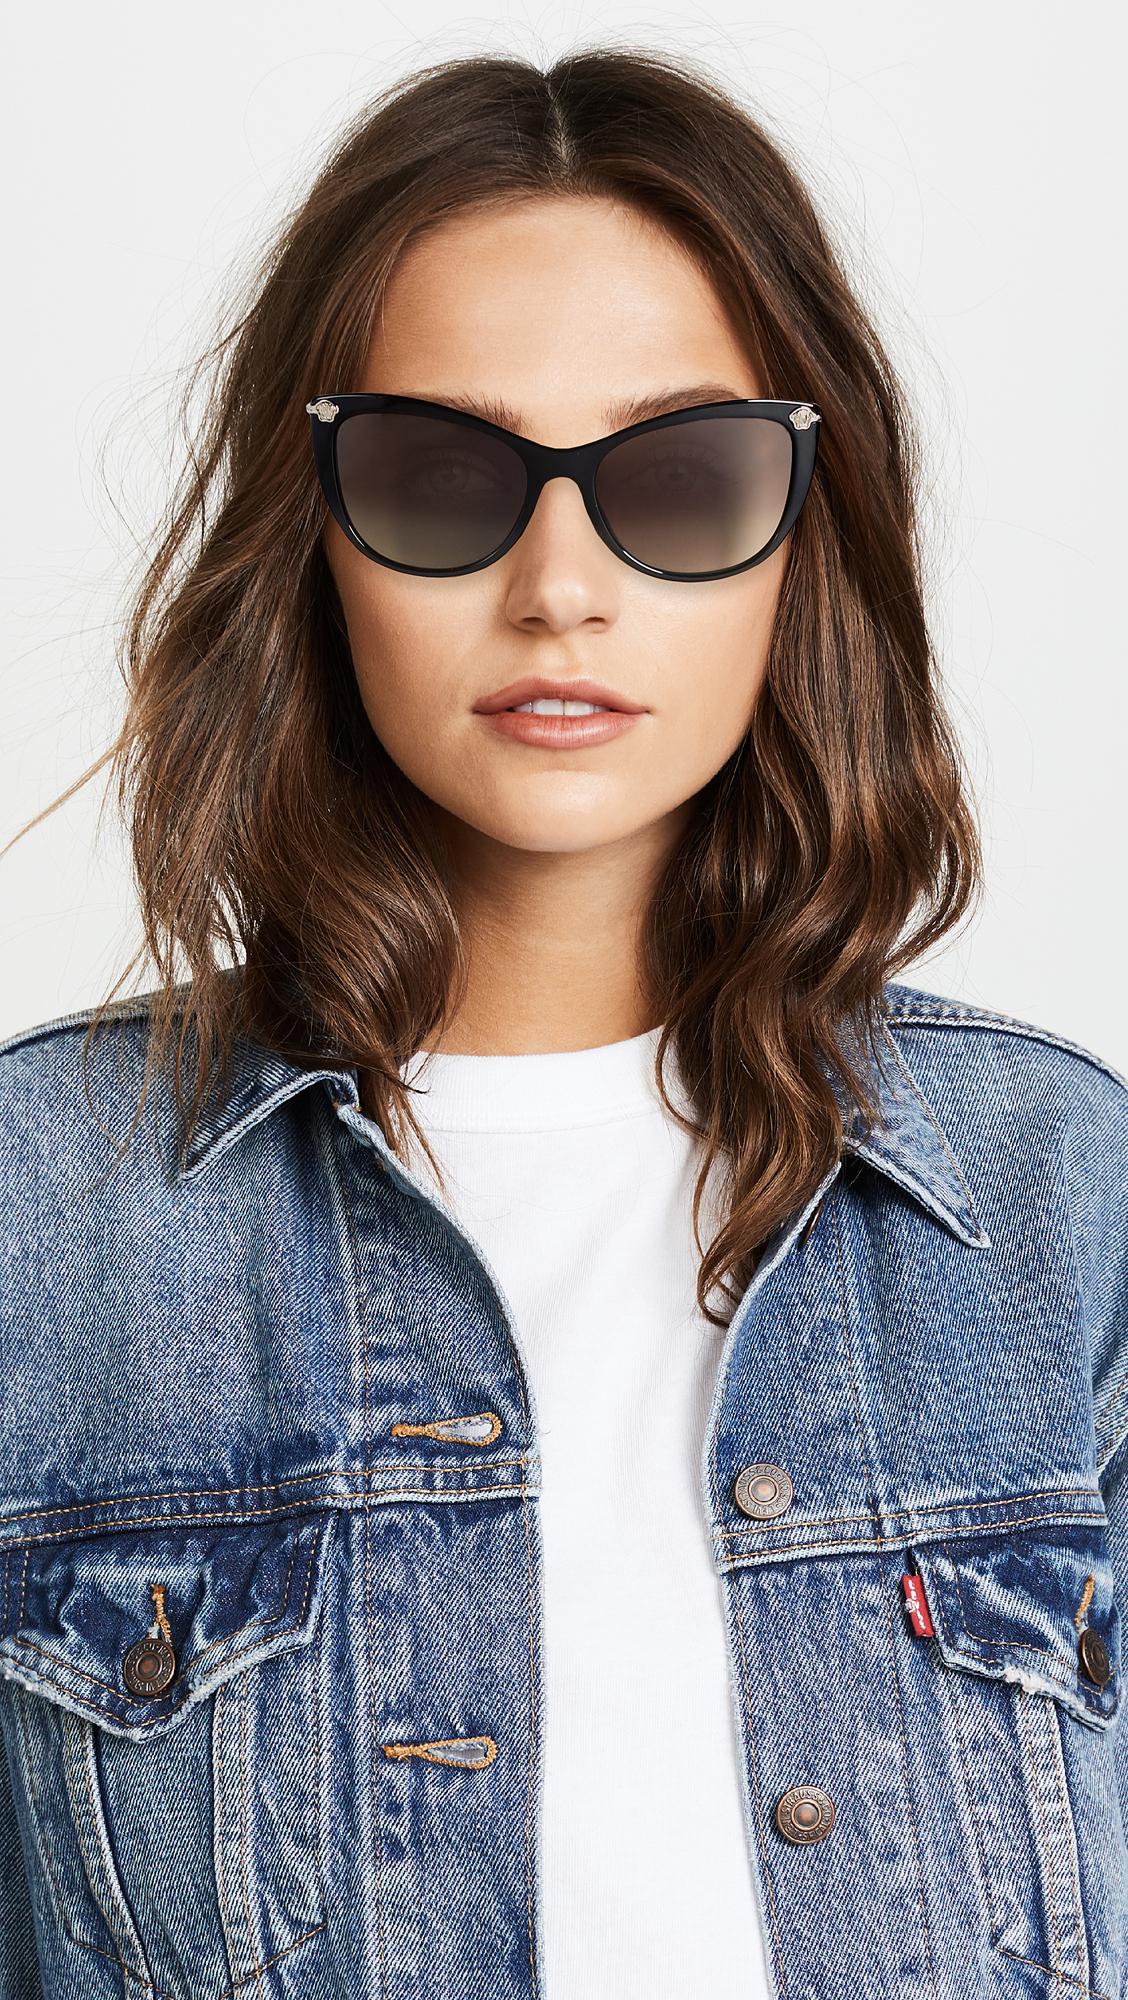 versace pop chic sunglasses